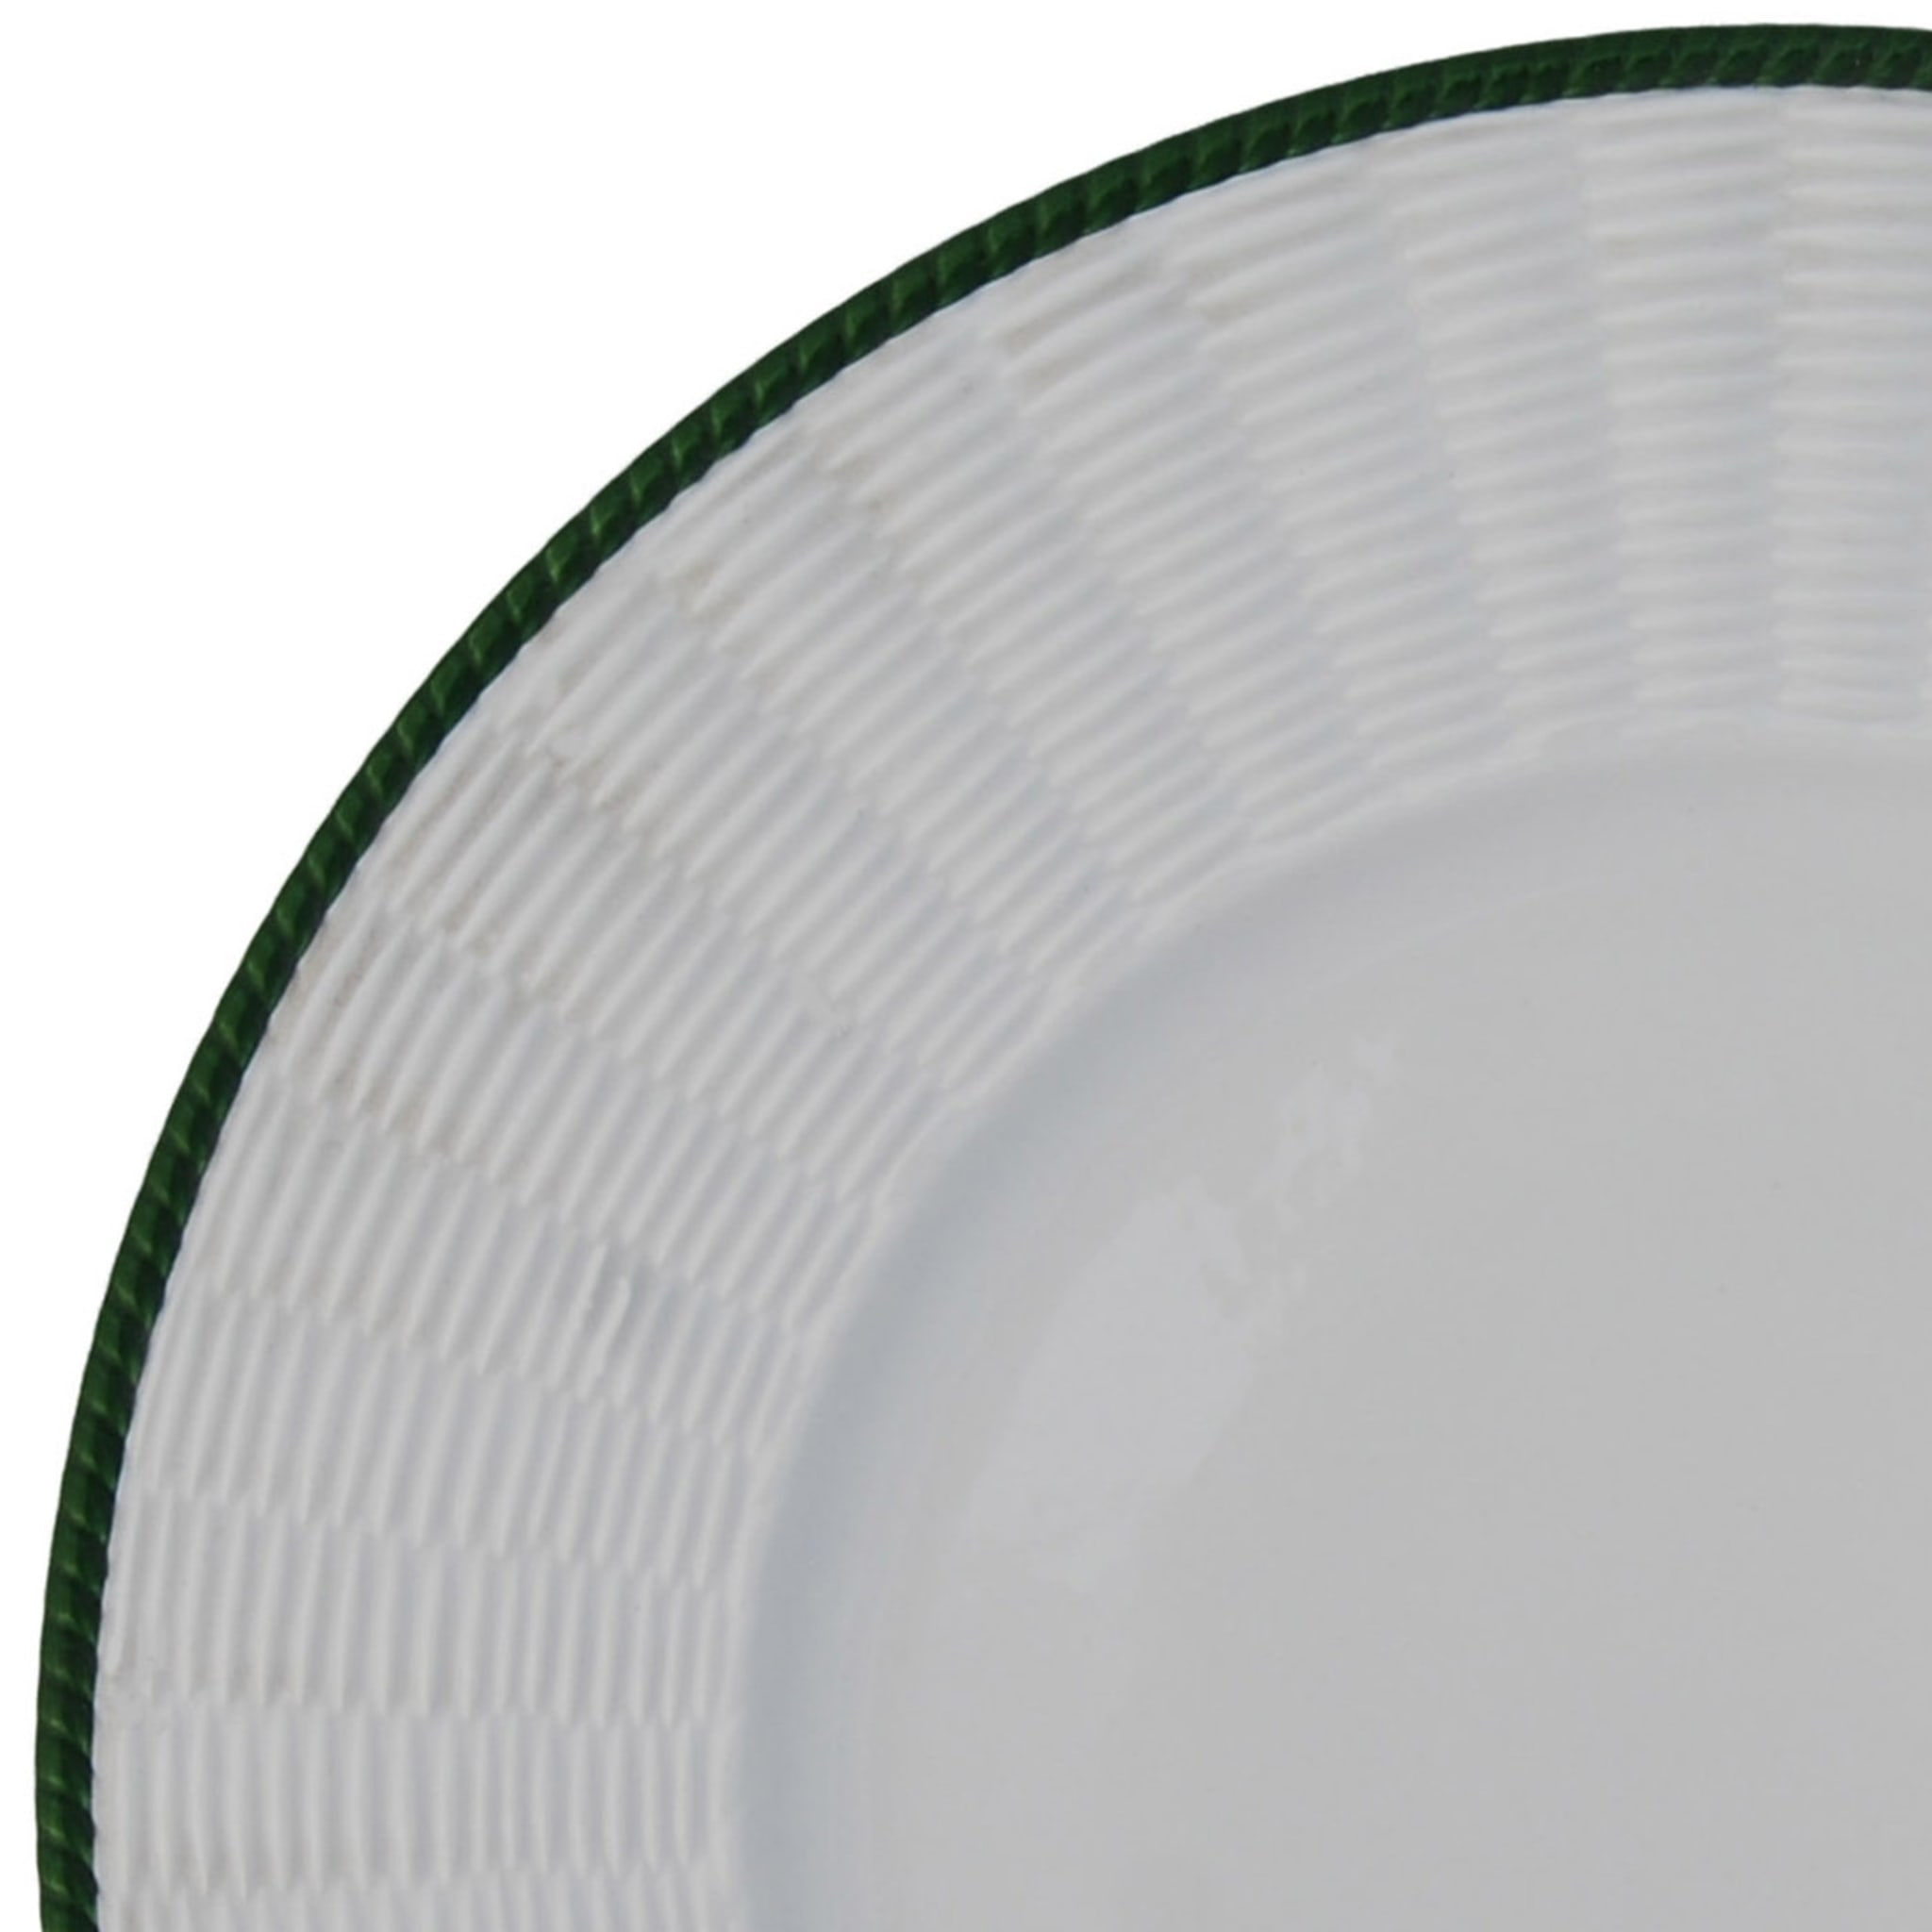 Set of 4 Green Wicker Ceramic Plates - Alternative view 1